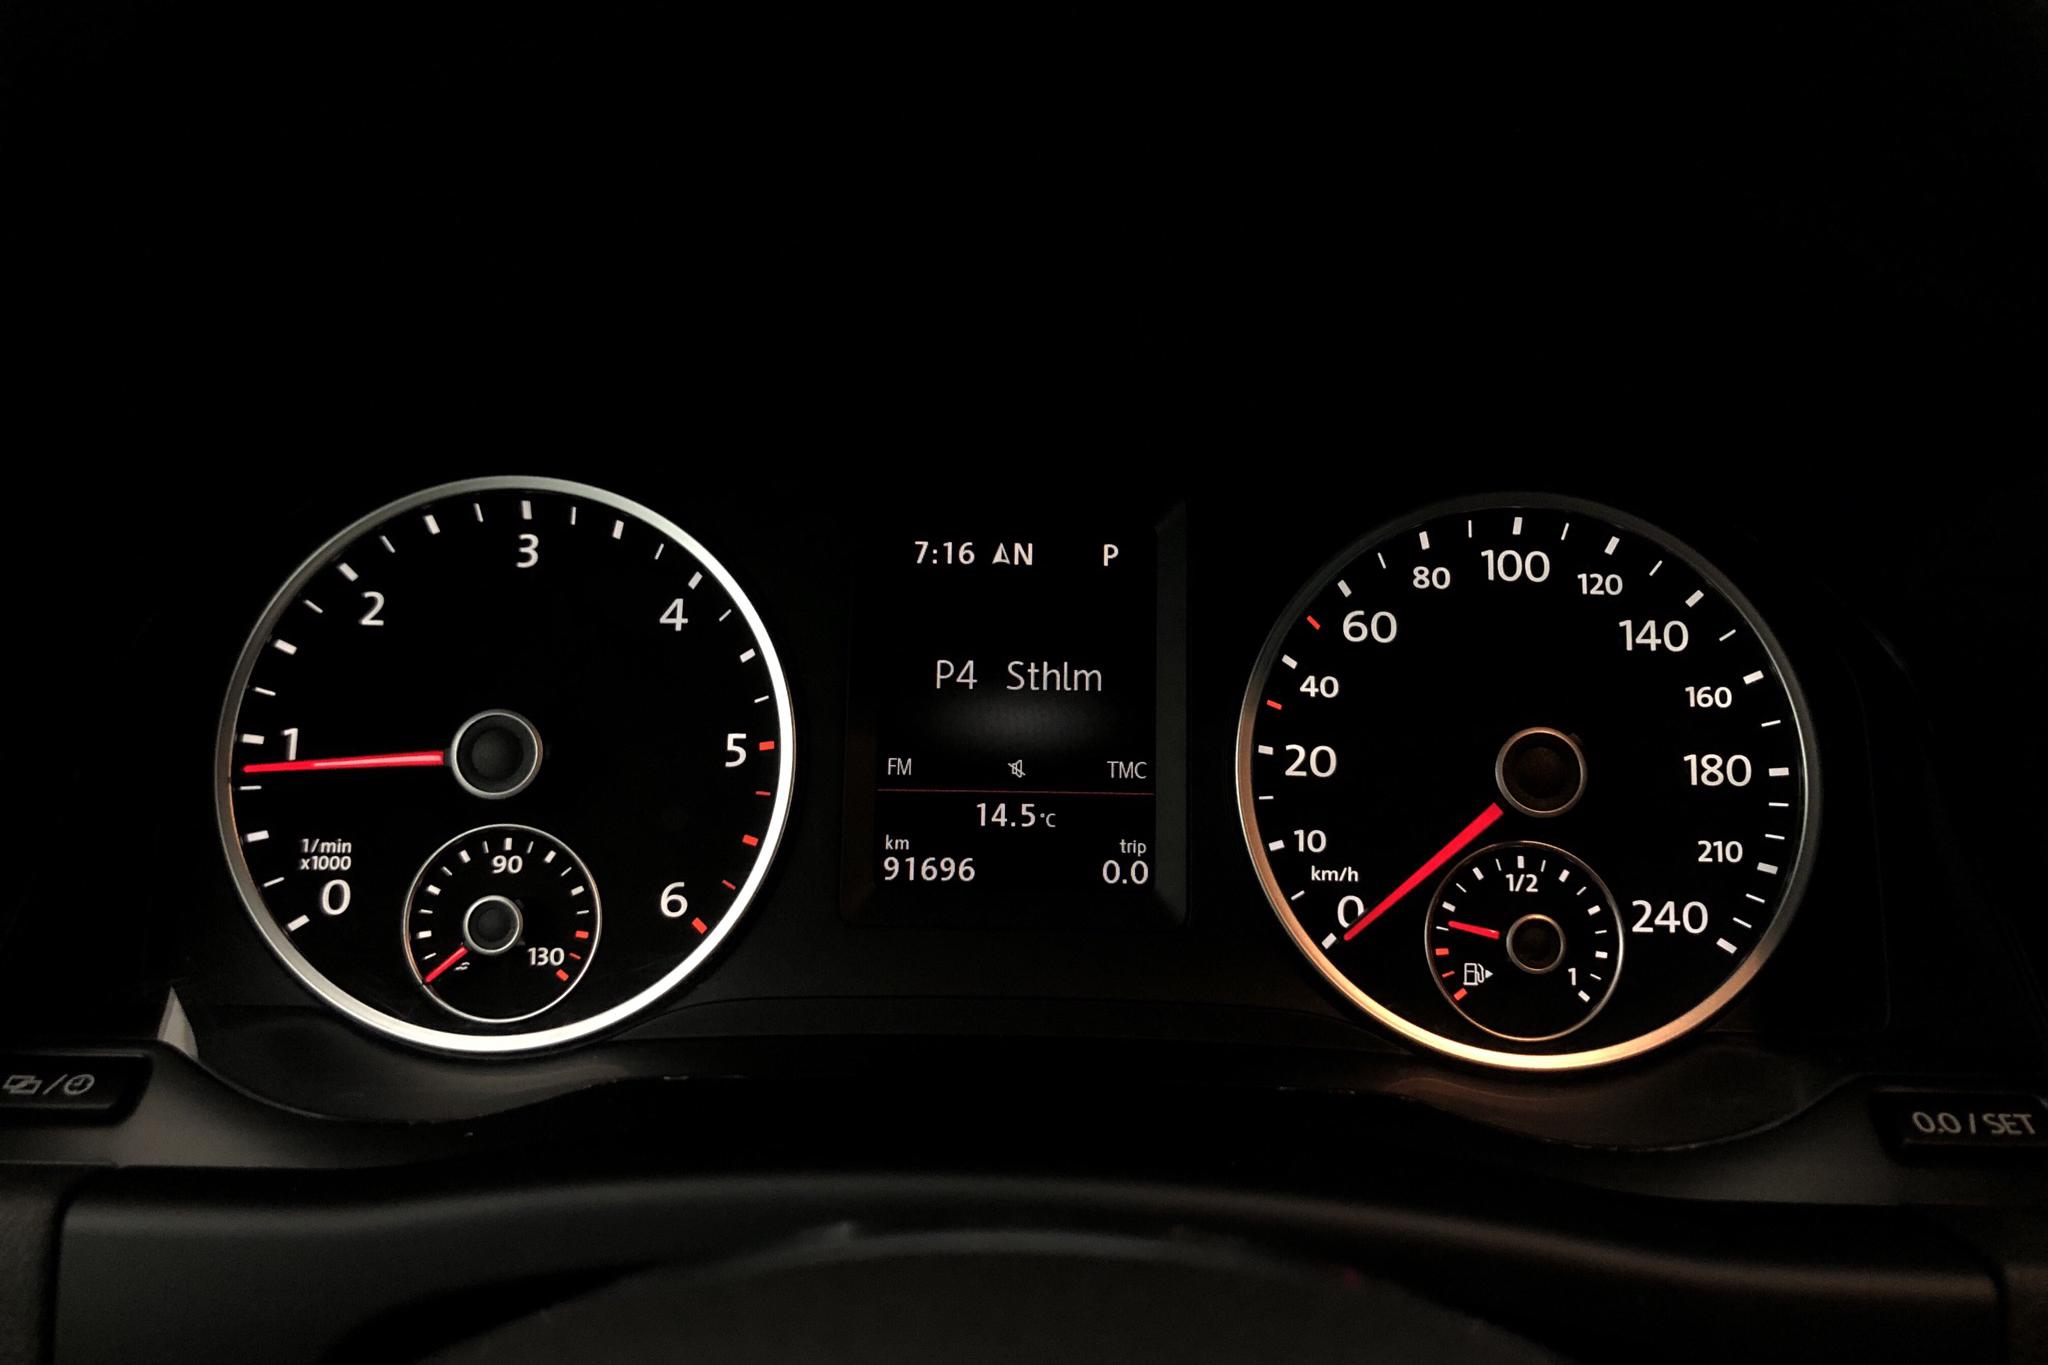 VW Tiguan 2.0 TDI 4MOTION BlueMotion Technology (177hk) - 9 176 mil - Automat - vit - 2015